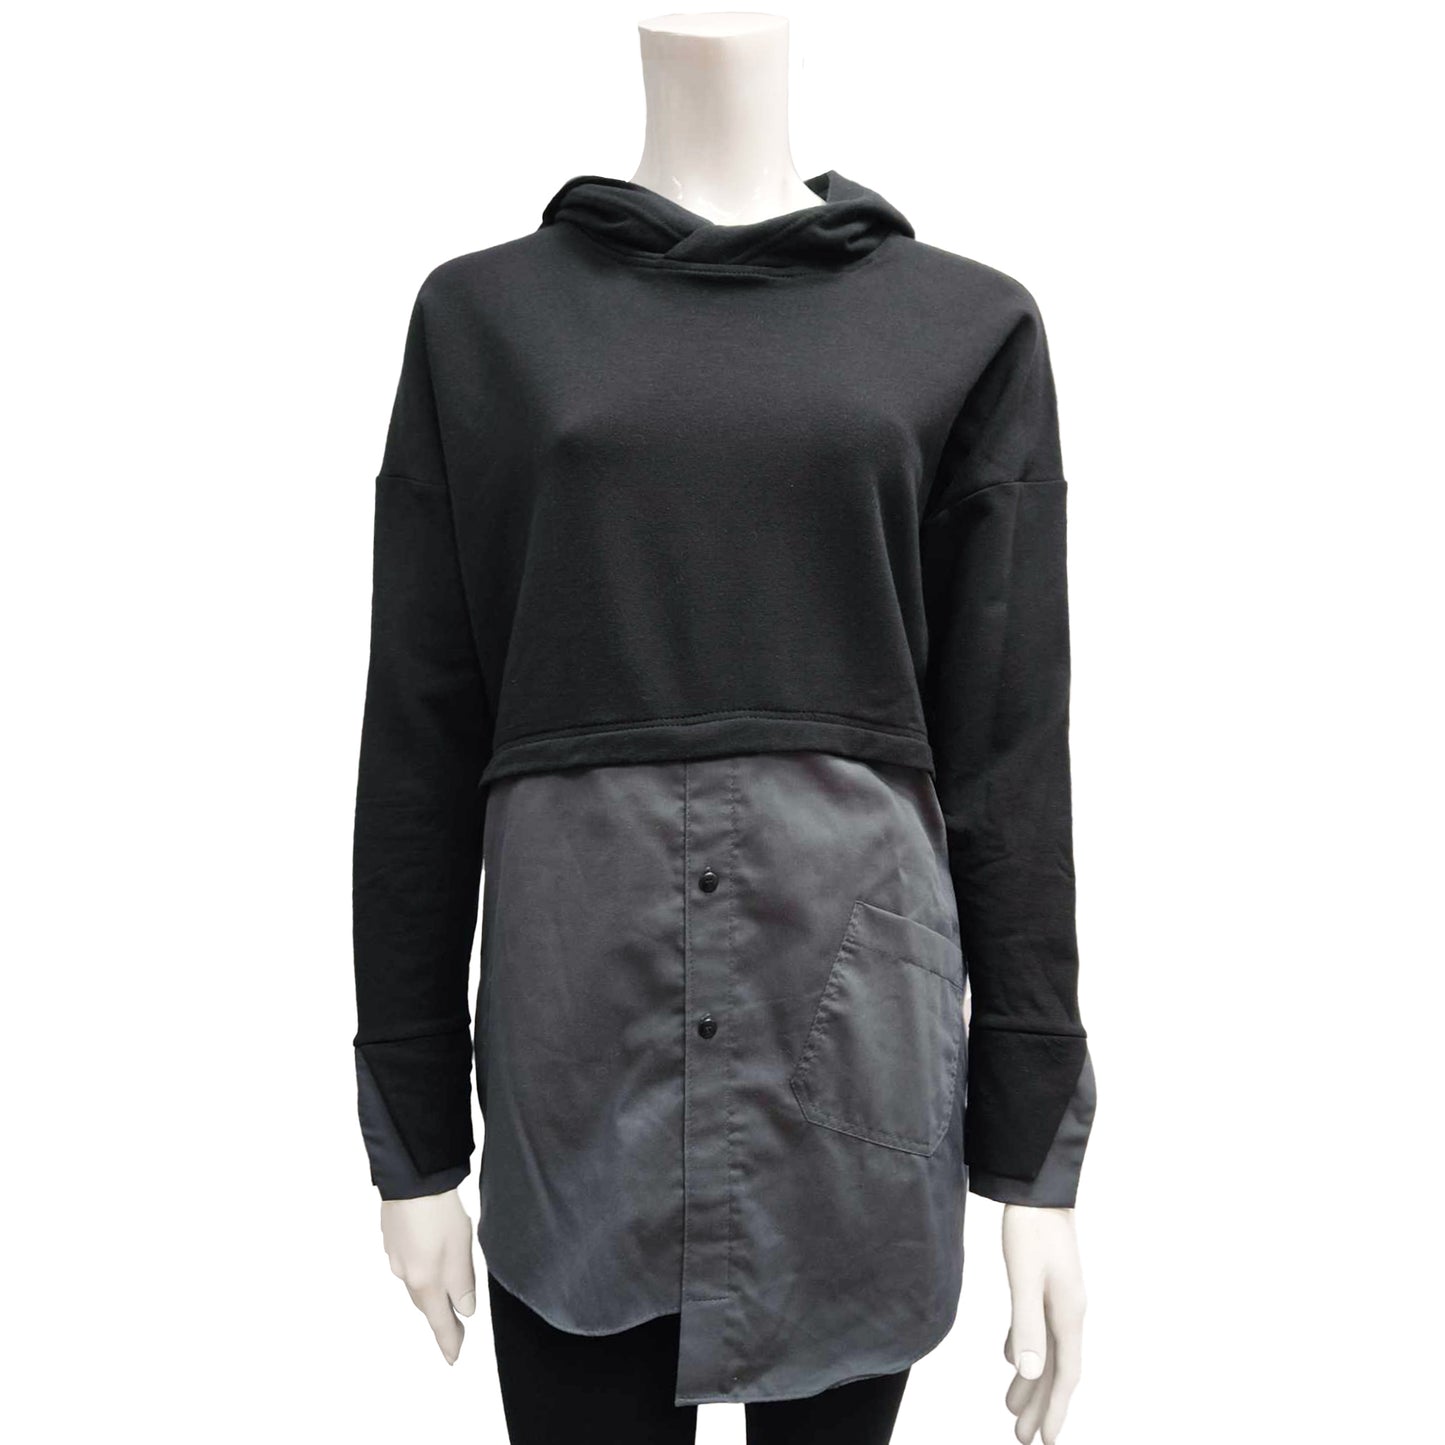 Women's hooded sweatshirt - SYDNEY | Charcoal